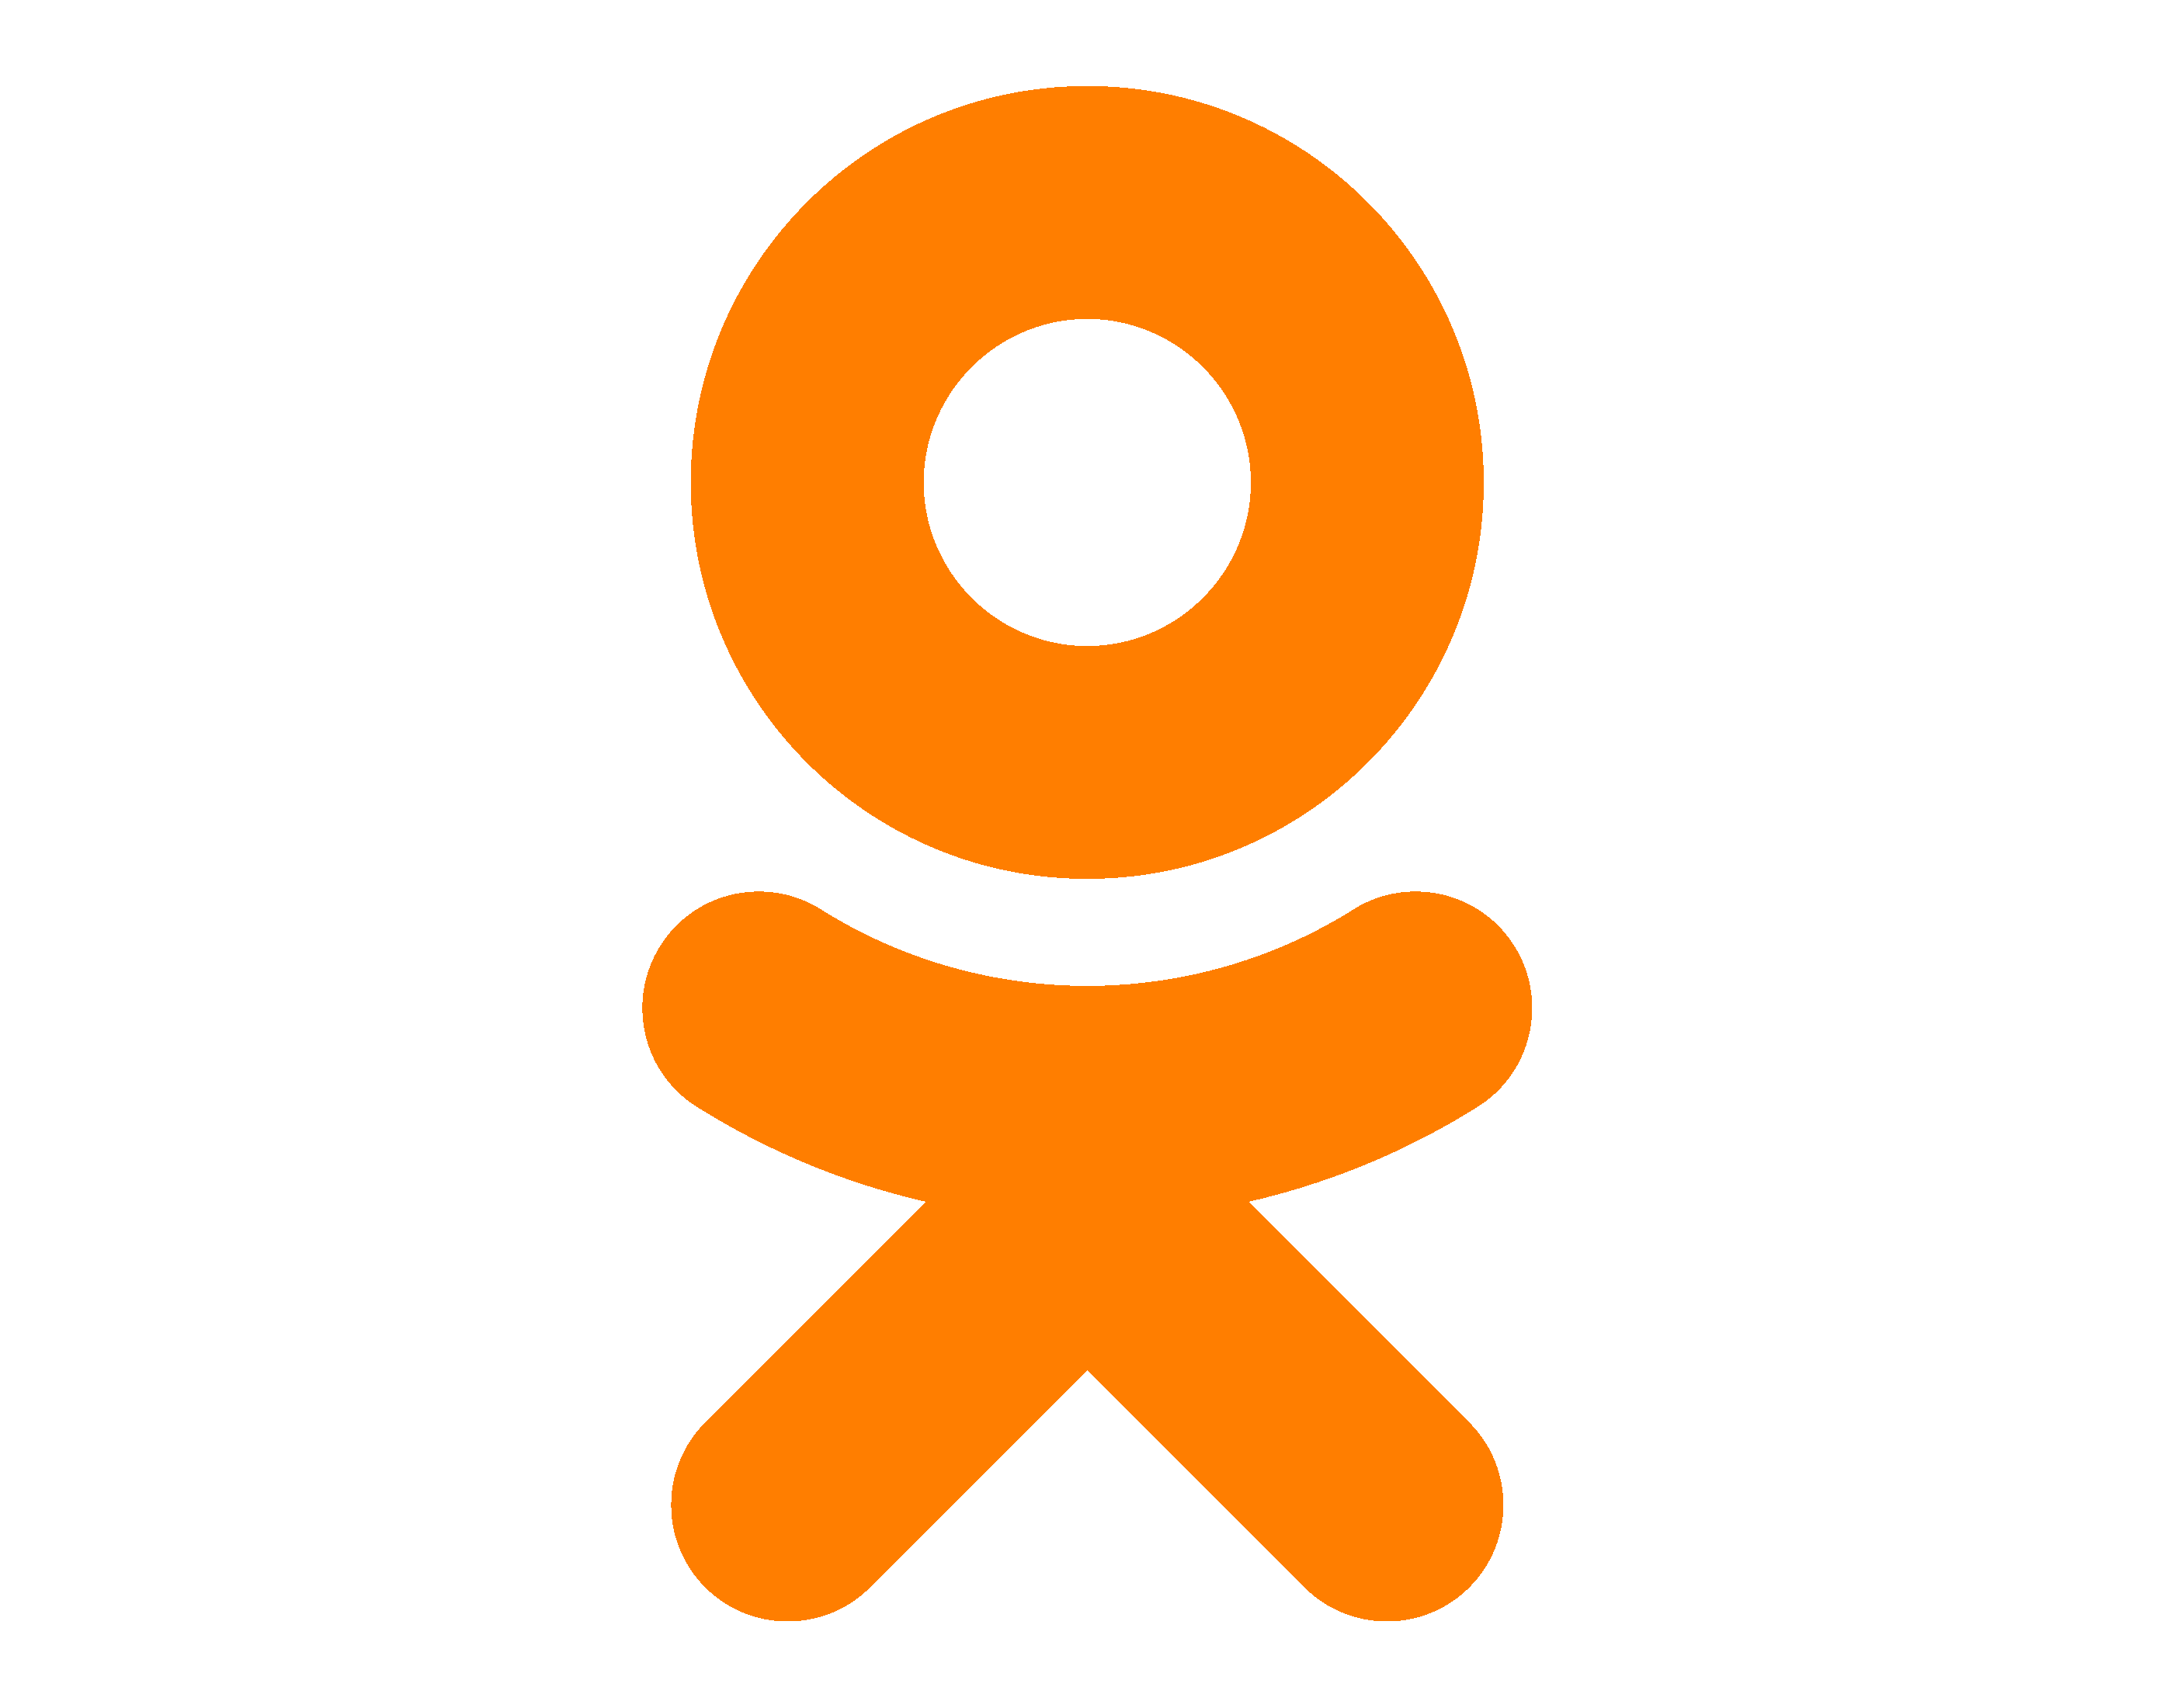 Odnoklassniki Logo, Odnoklassniki Symbol, Meaning, History and Evolution2800 x 2200